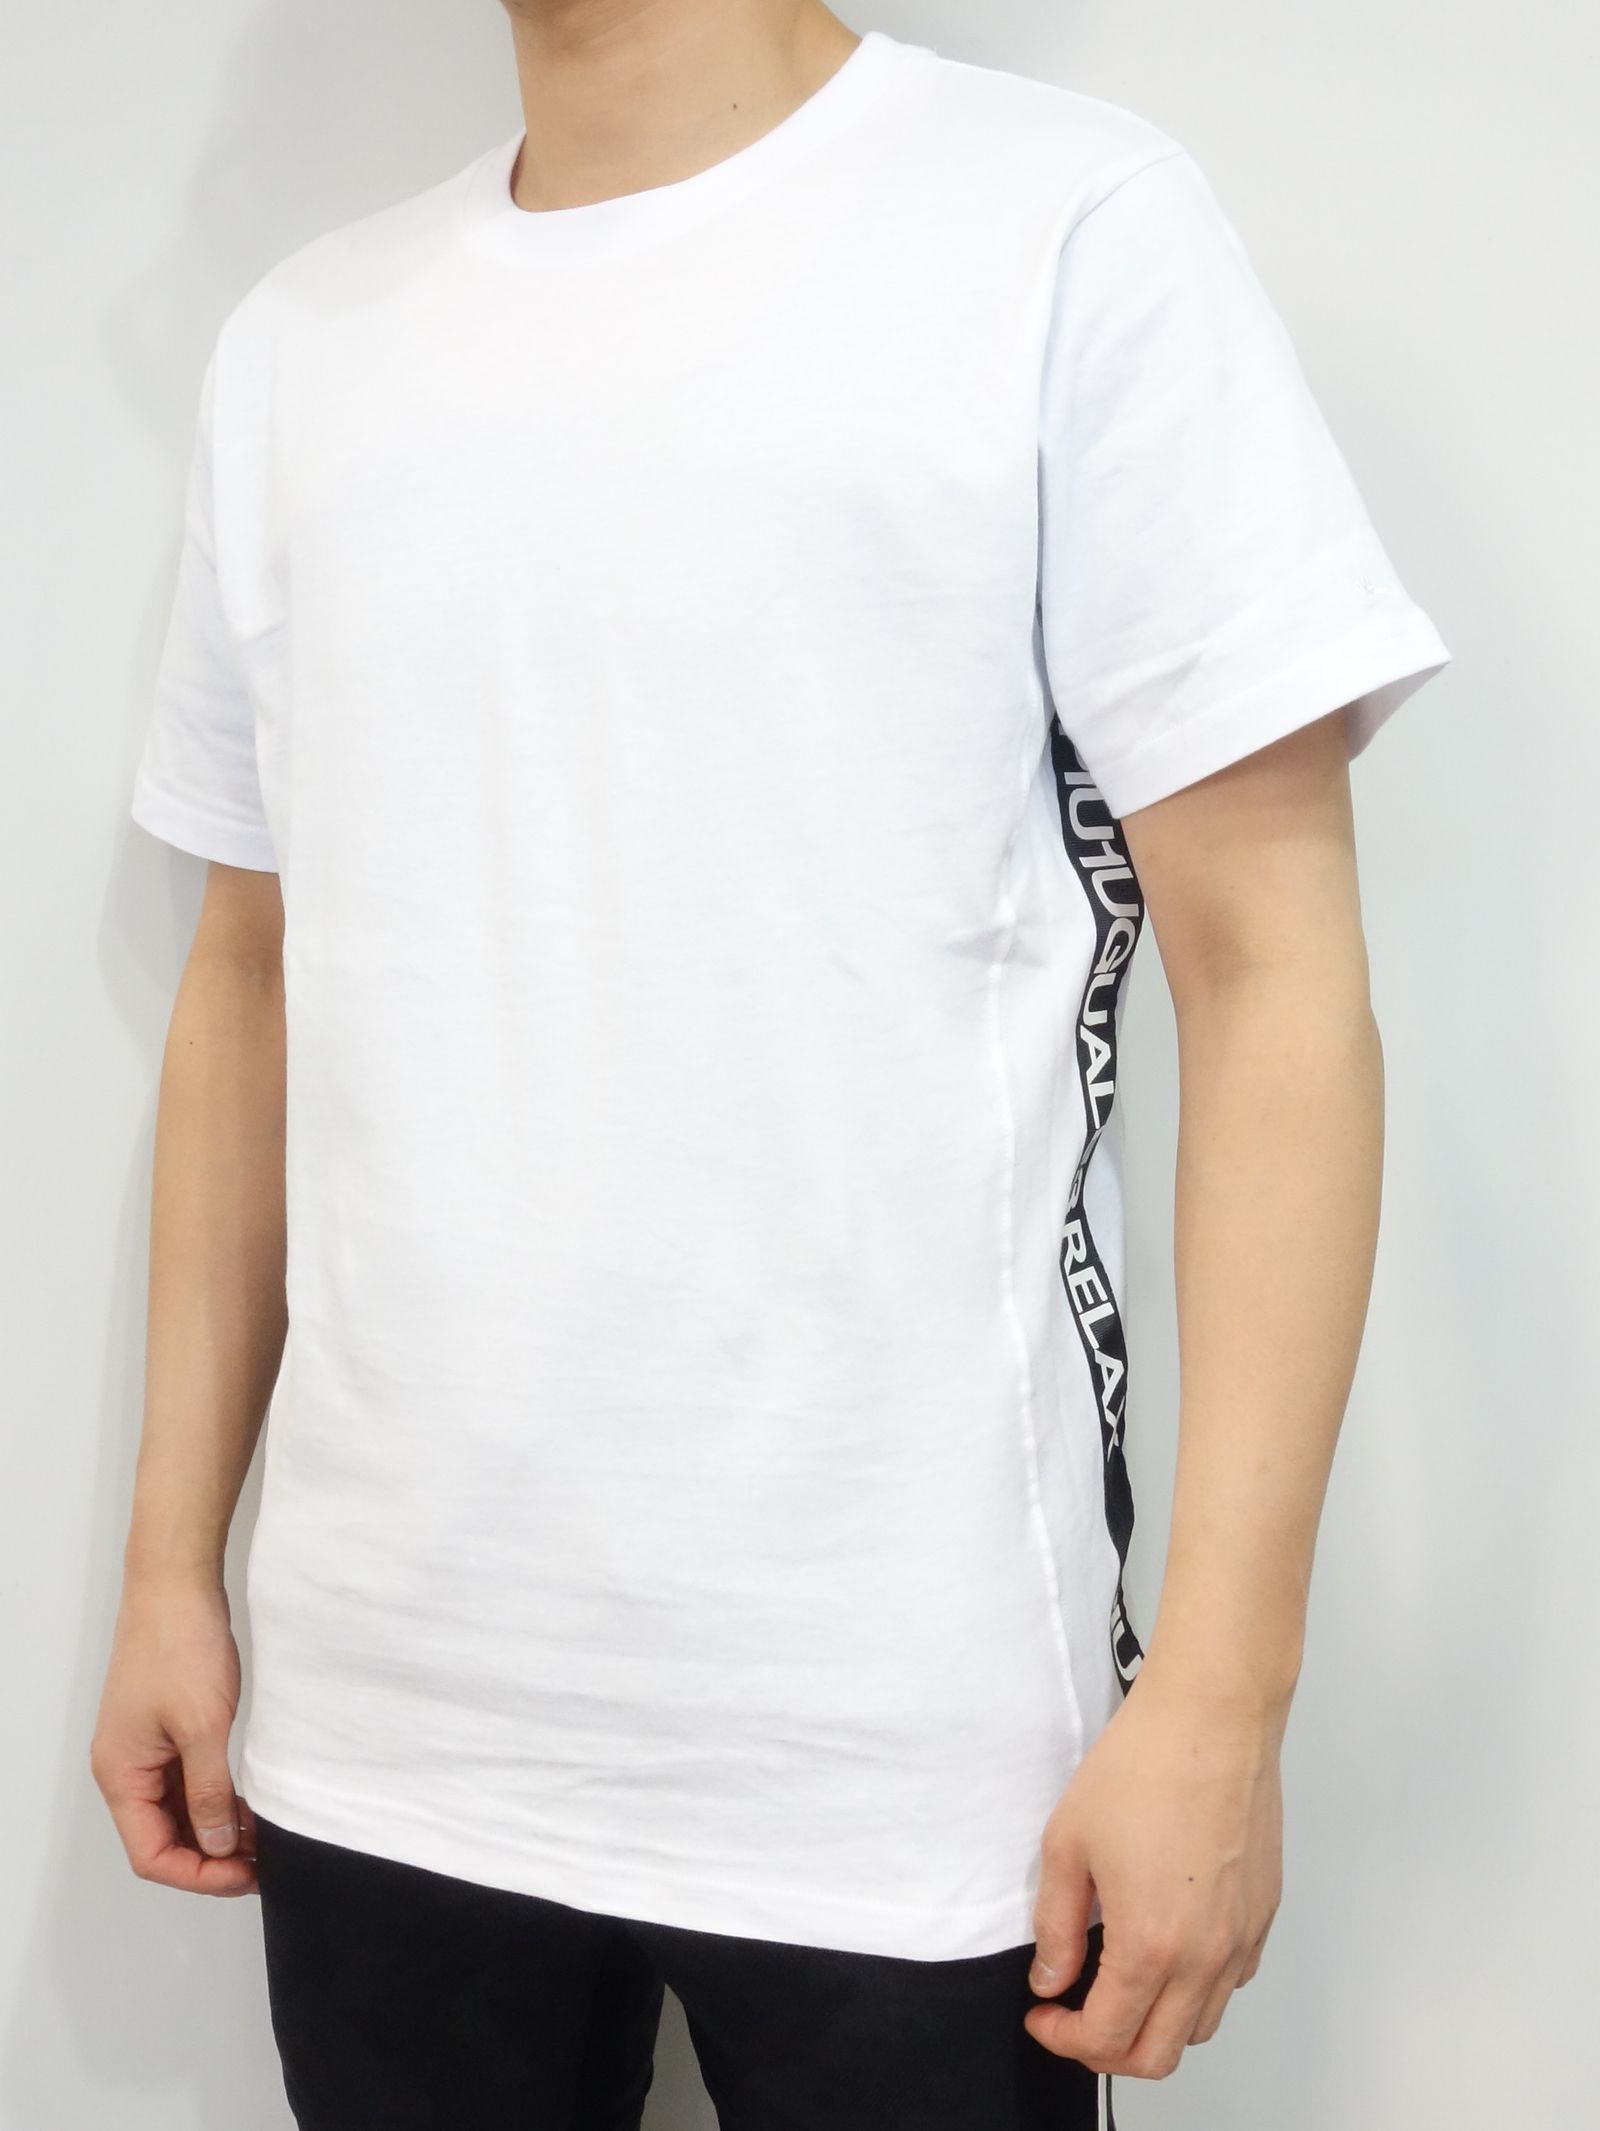 1PIU1UGUALE3 RELAX - サイドラインテープロゴ半袖Tシャツ / ust